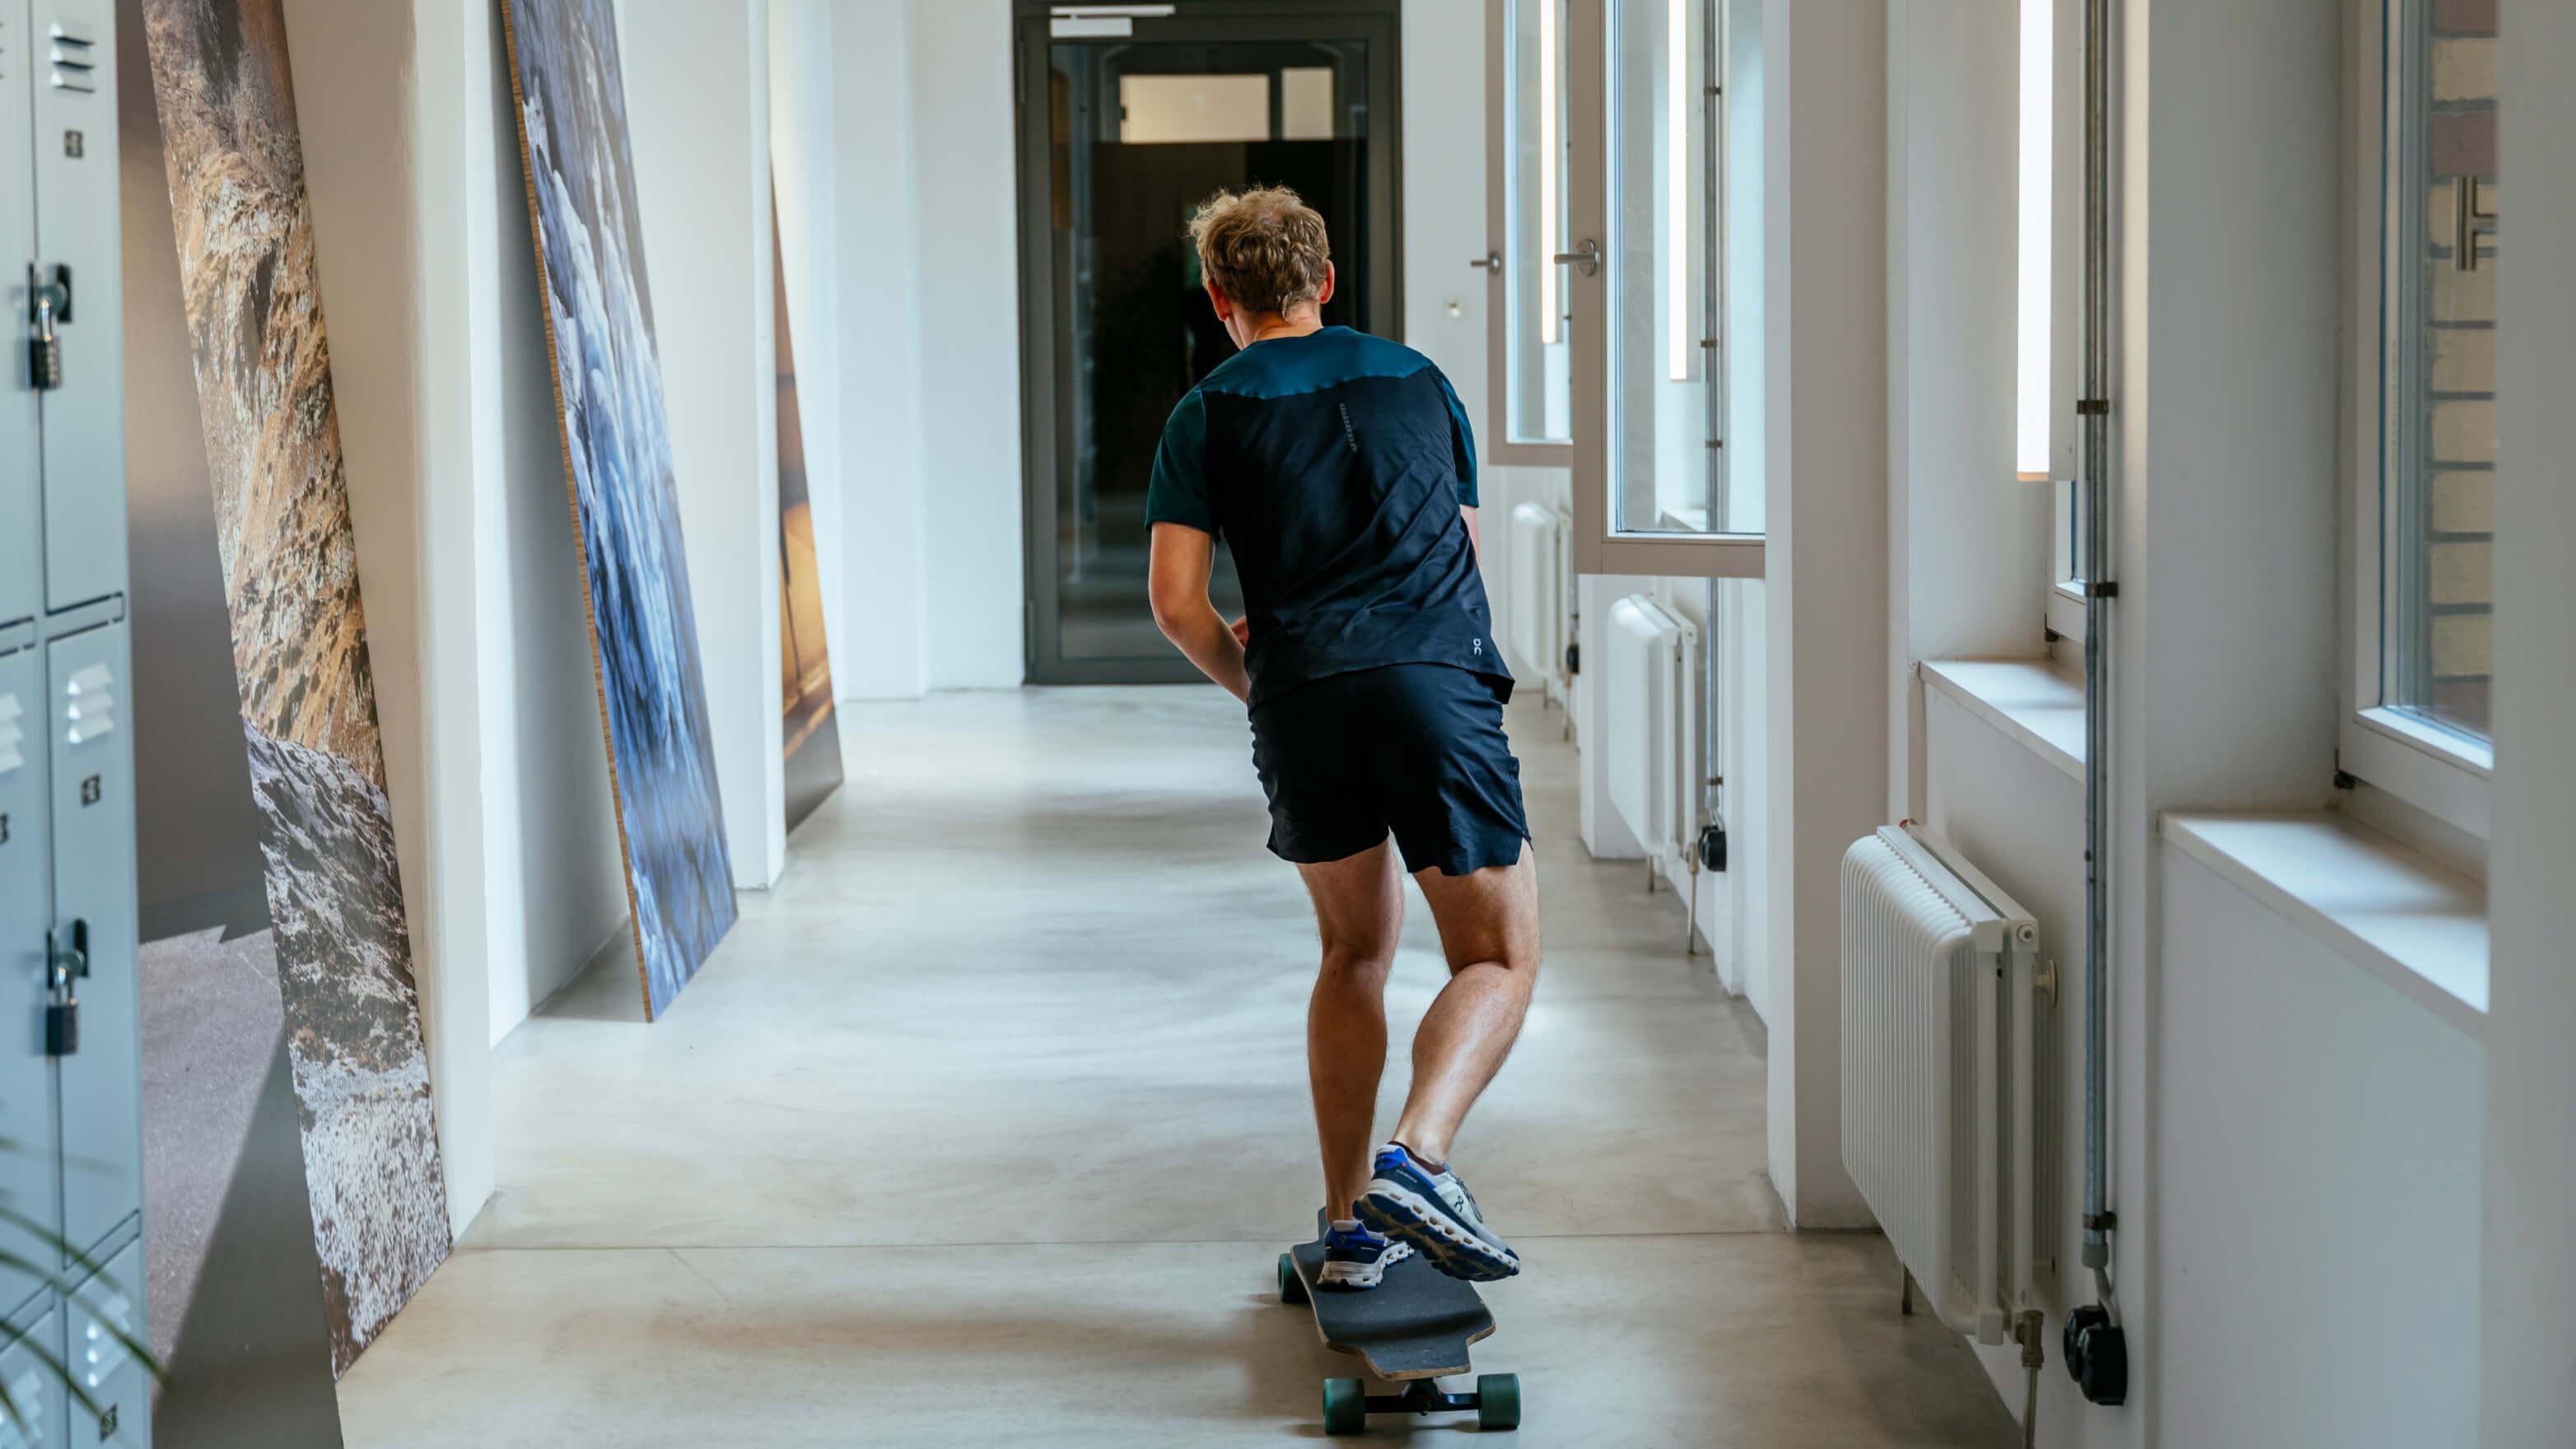 The guy skateboarding in the office hallway